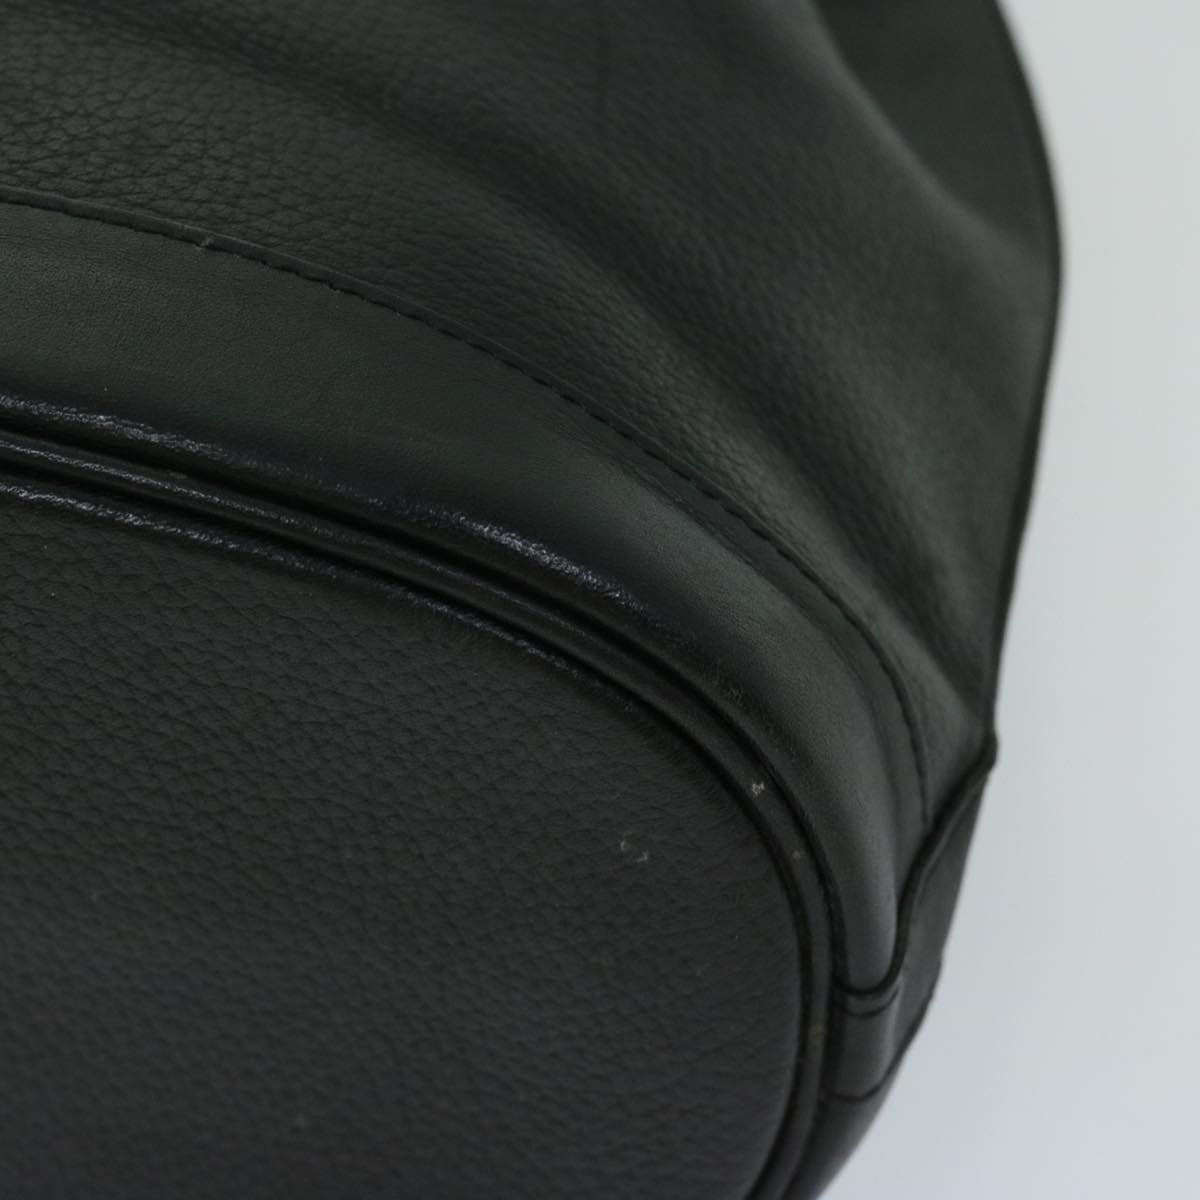 Burberrys Shoulder Bag Leather Black Auth 68201